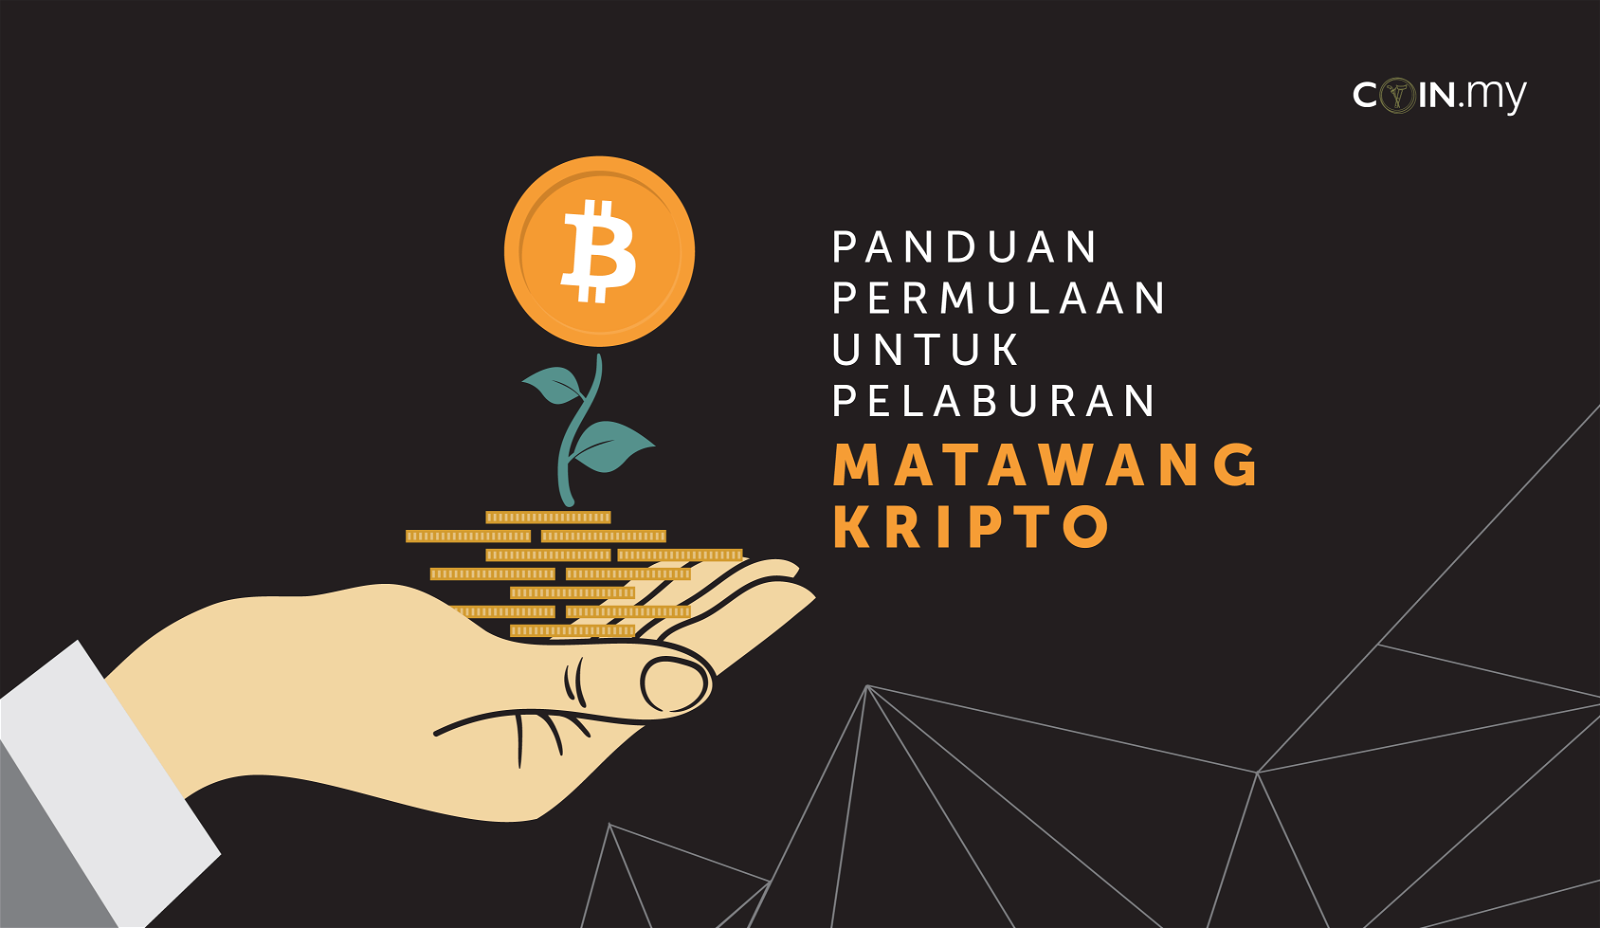 an image for a post on pelaburan matawang crypto